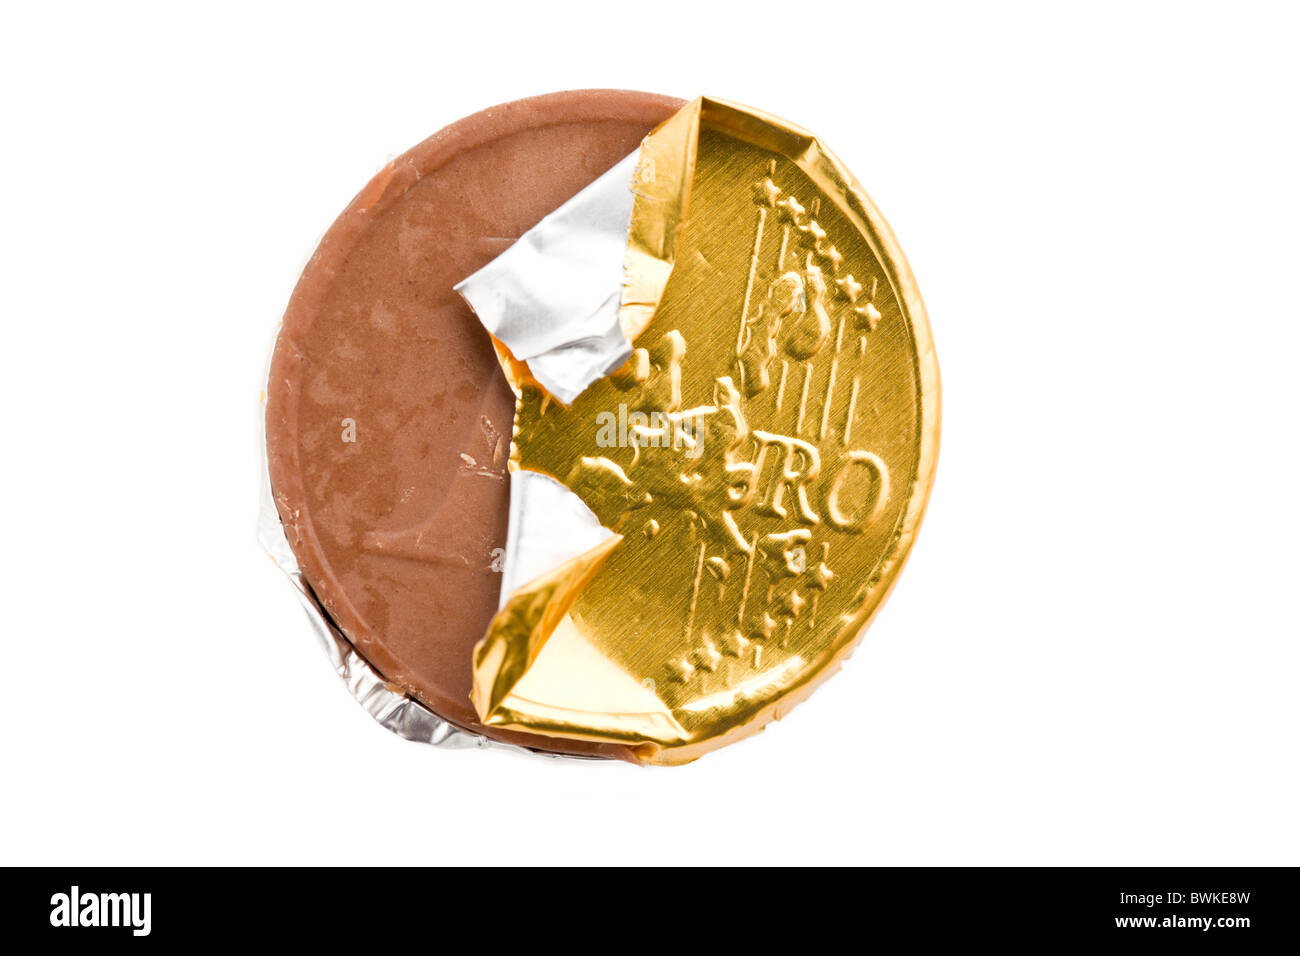 PIÈCE 1 EURO CHOCOLAT 20g x36